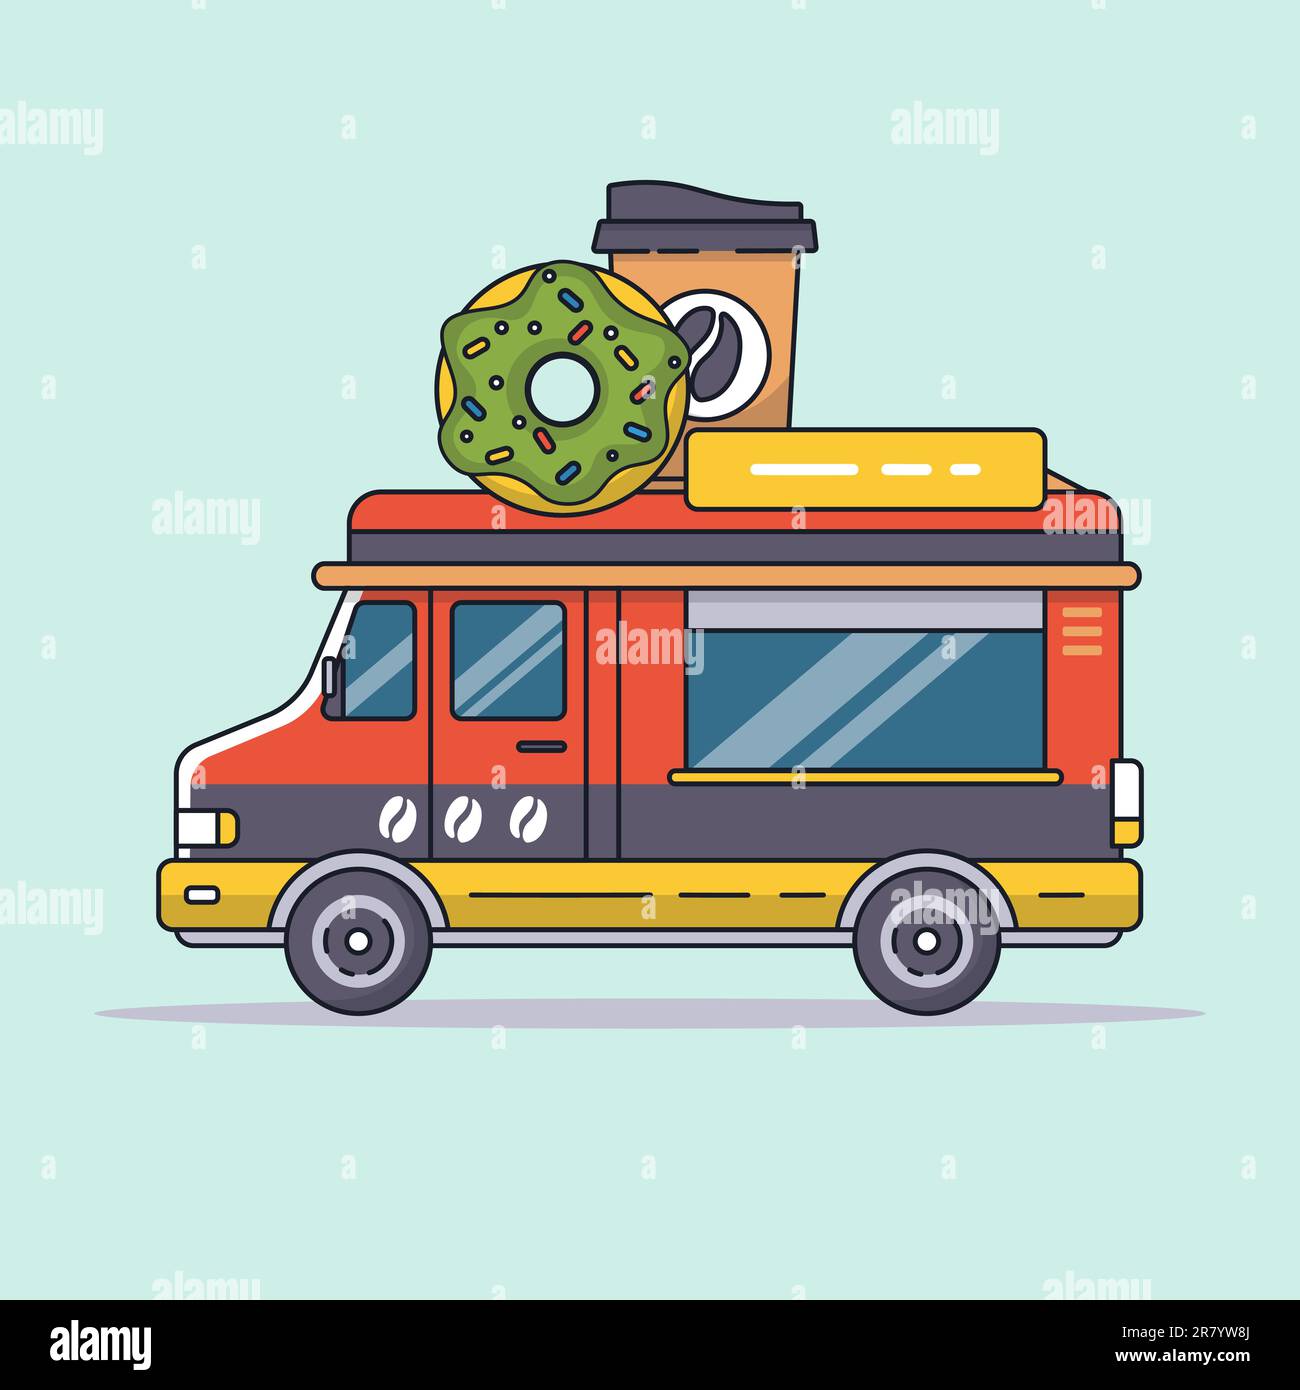 Vektorgrafik: Roter Food-Truck-Bus, der Kaffee und Donuts im Auto verkauft Stock Vektor